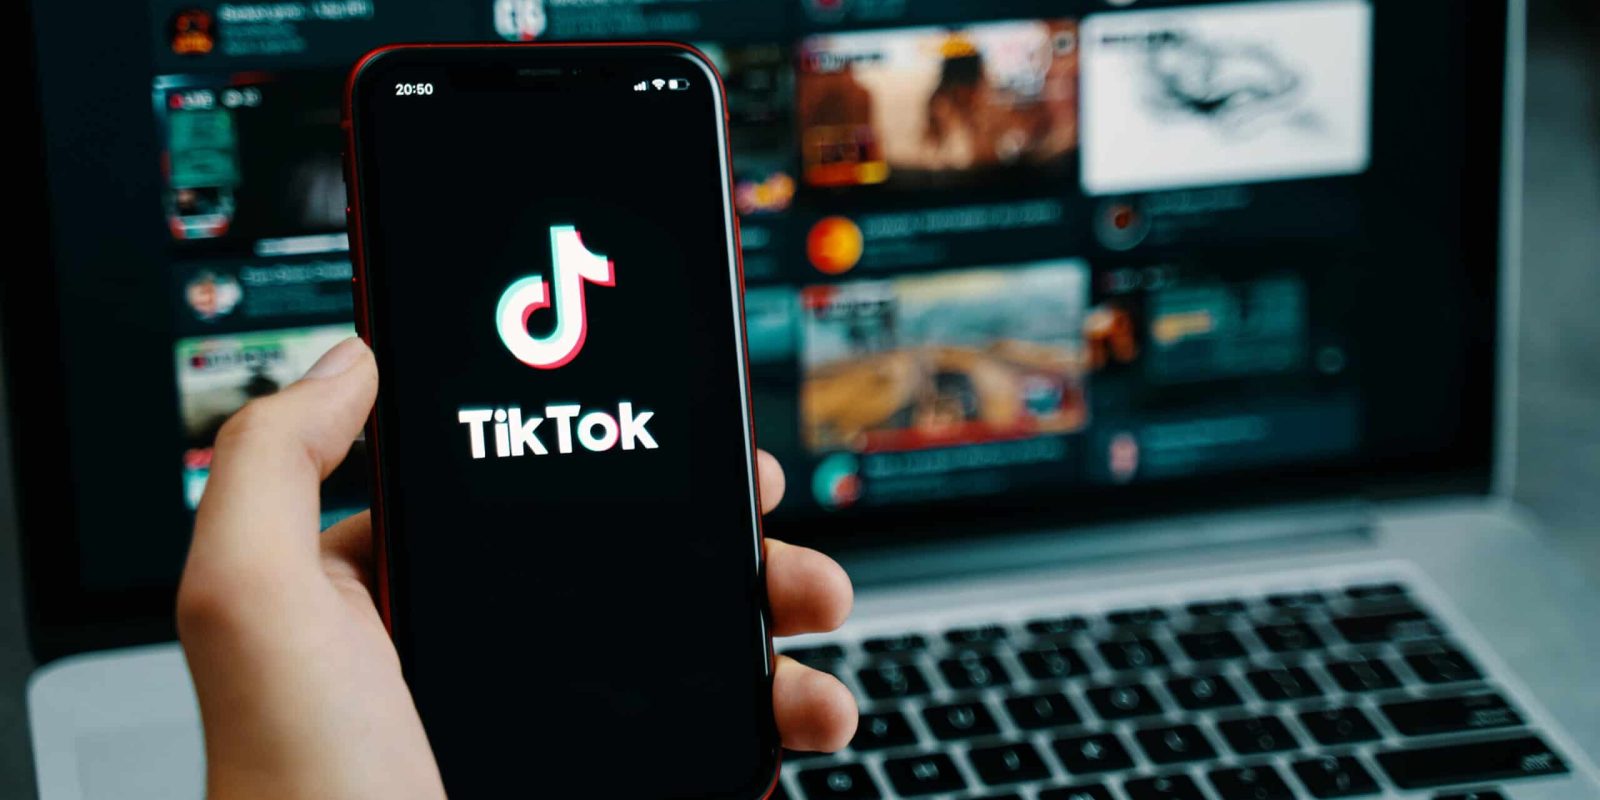 How to Delete a Repost on TikTok